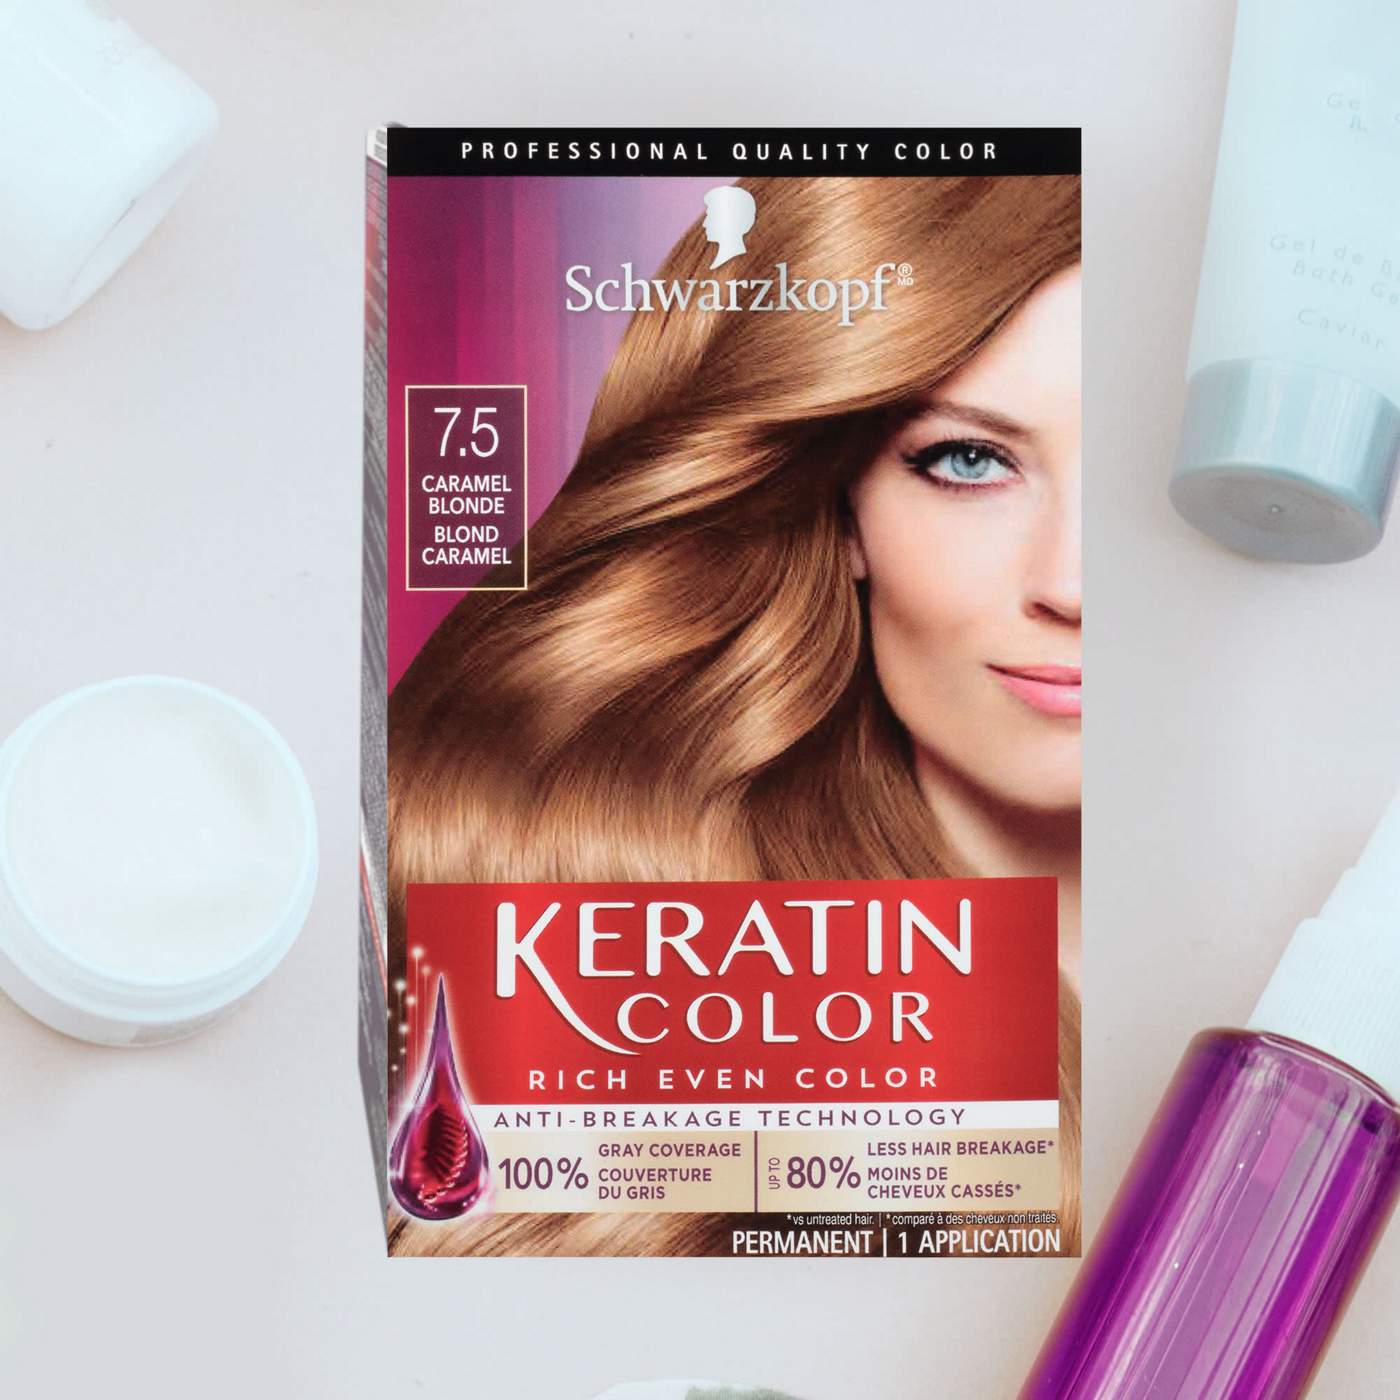 Schwarzkopf Keratin Color Permanent Hair Color Cream, 7.5 Caramel Blonde; image 4 of 5